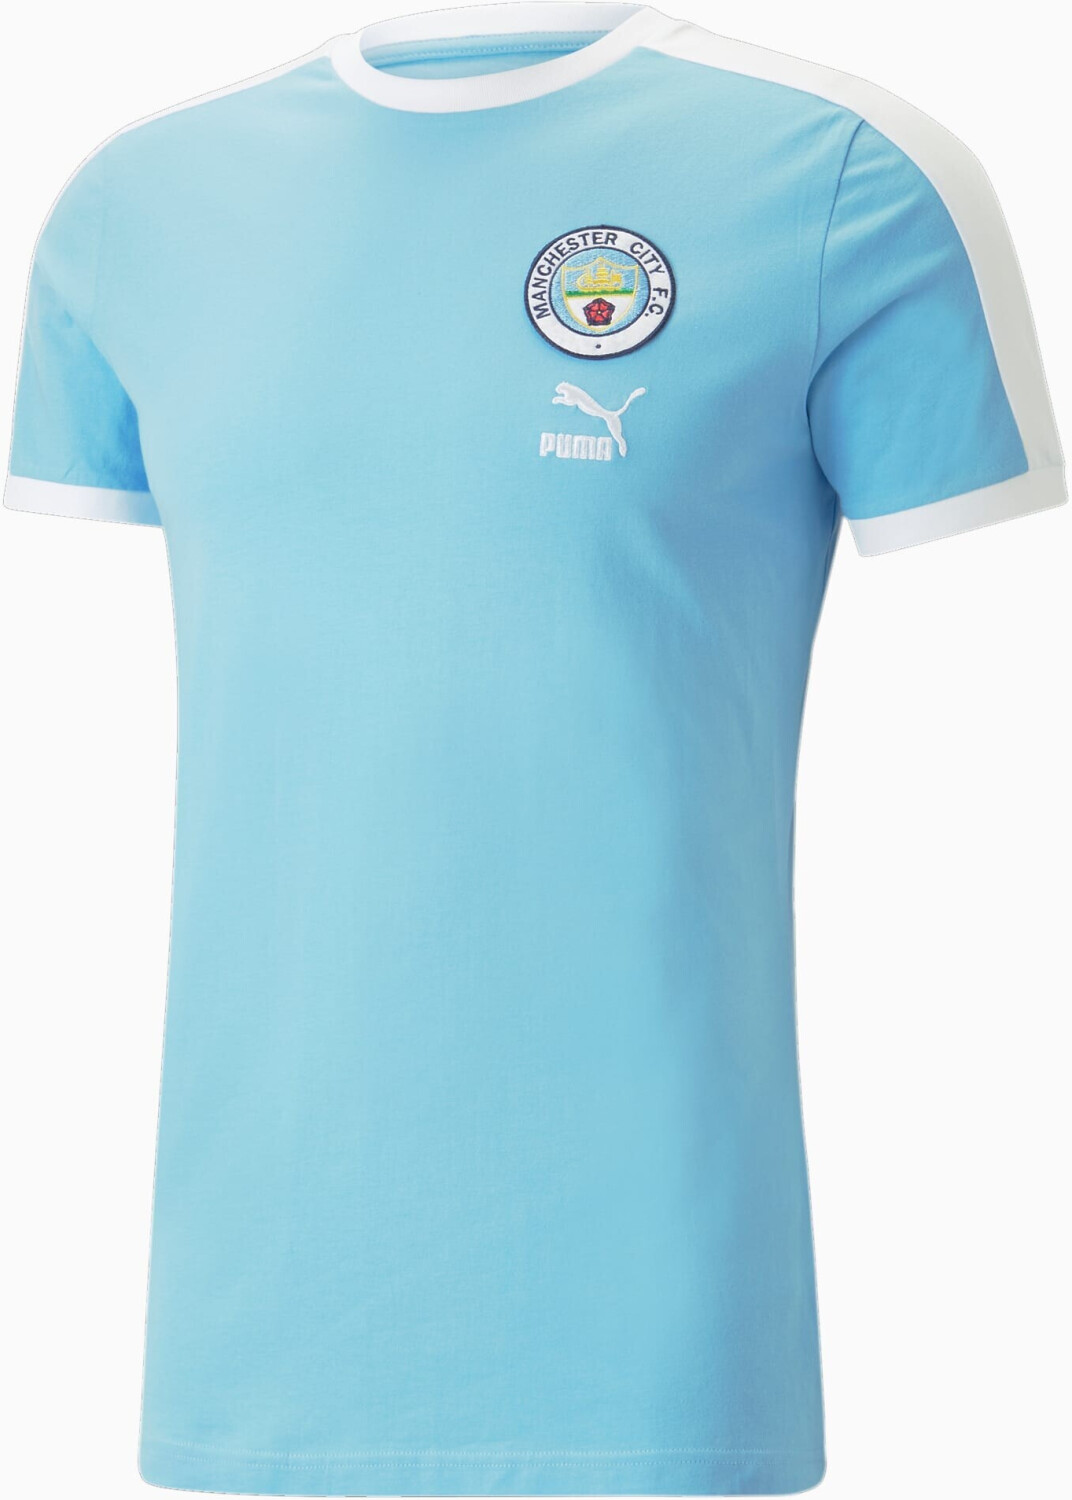 Puma Manchester City FC FtblCulture Tee 764525 01 Blue/White